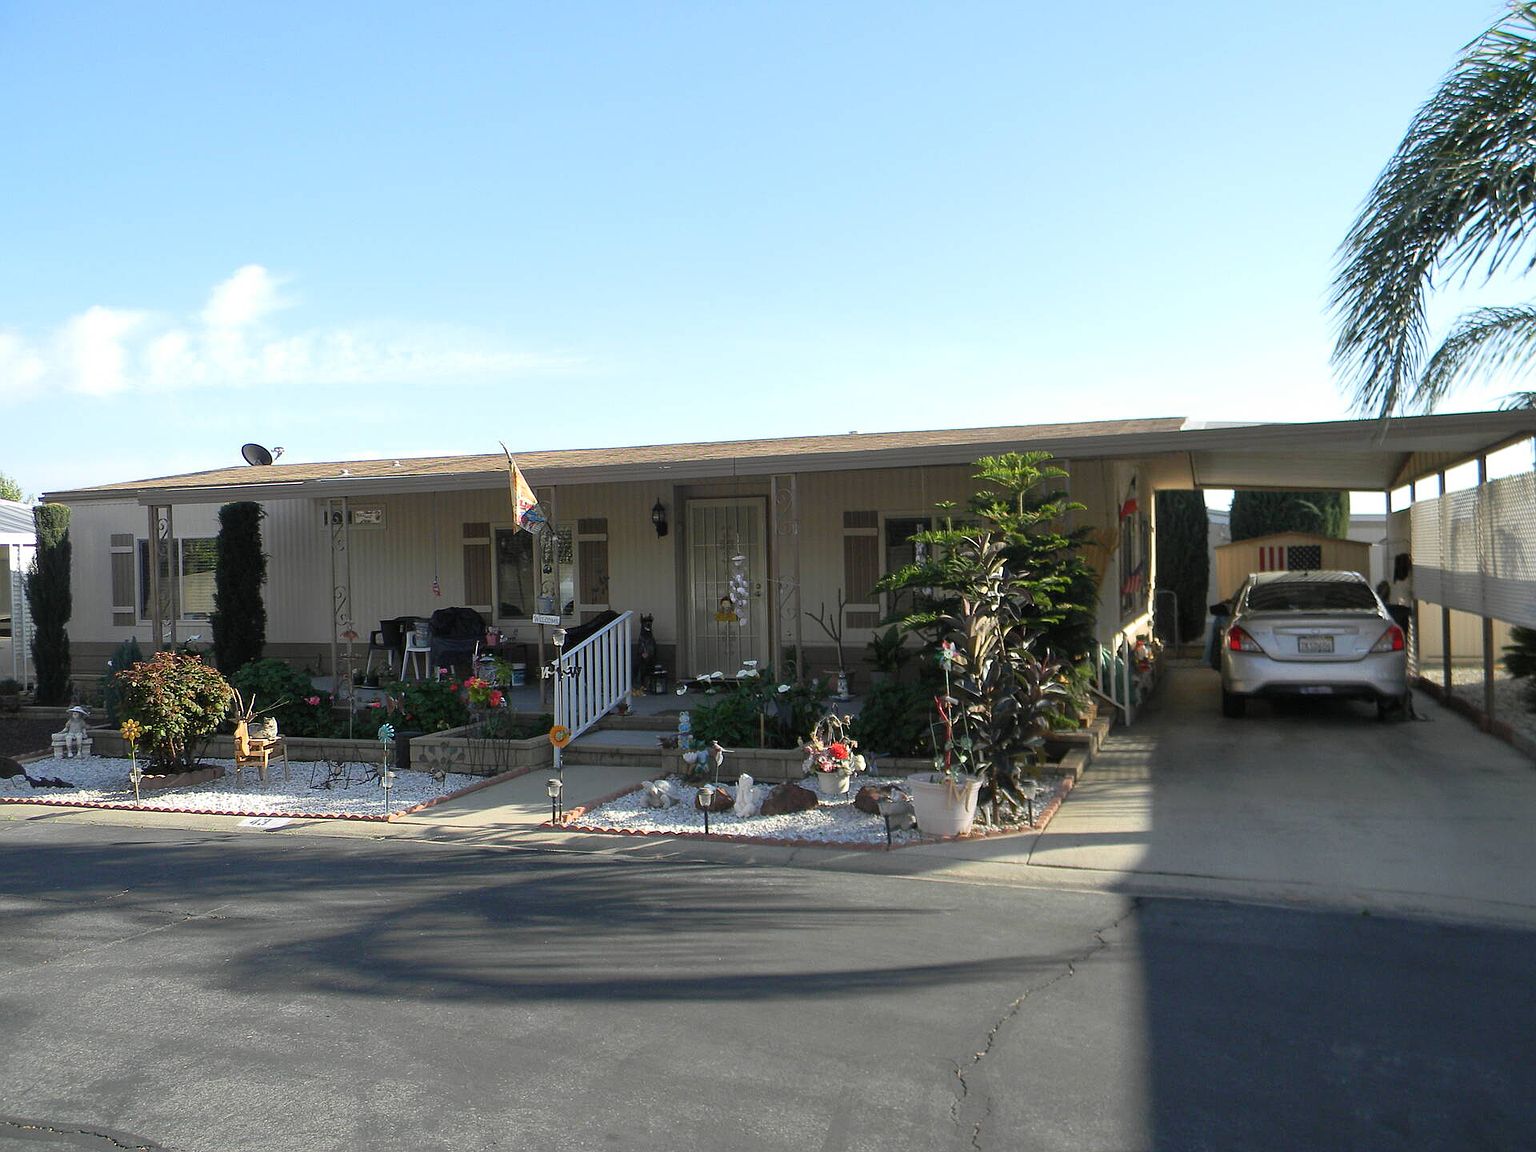 Baseline Rd, Rancho Cucamonga, CA, 91739 - Multifamily (land) For